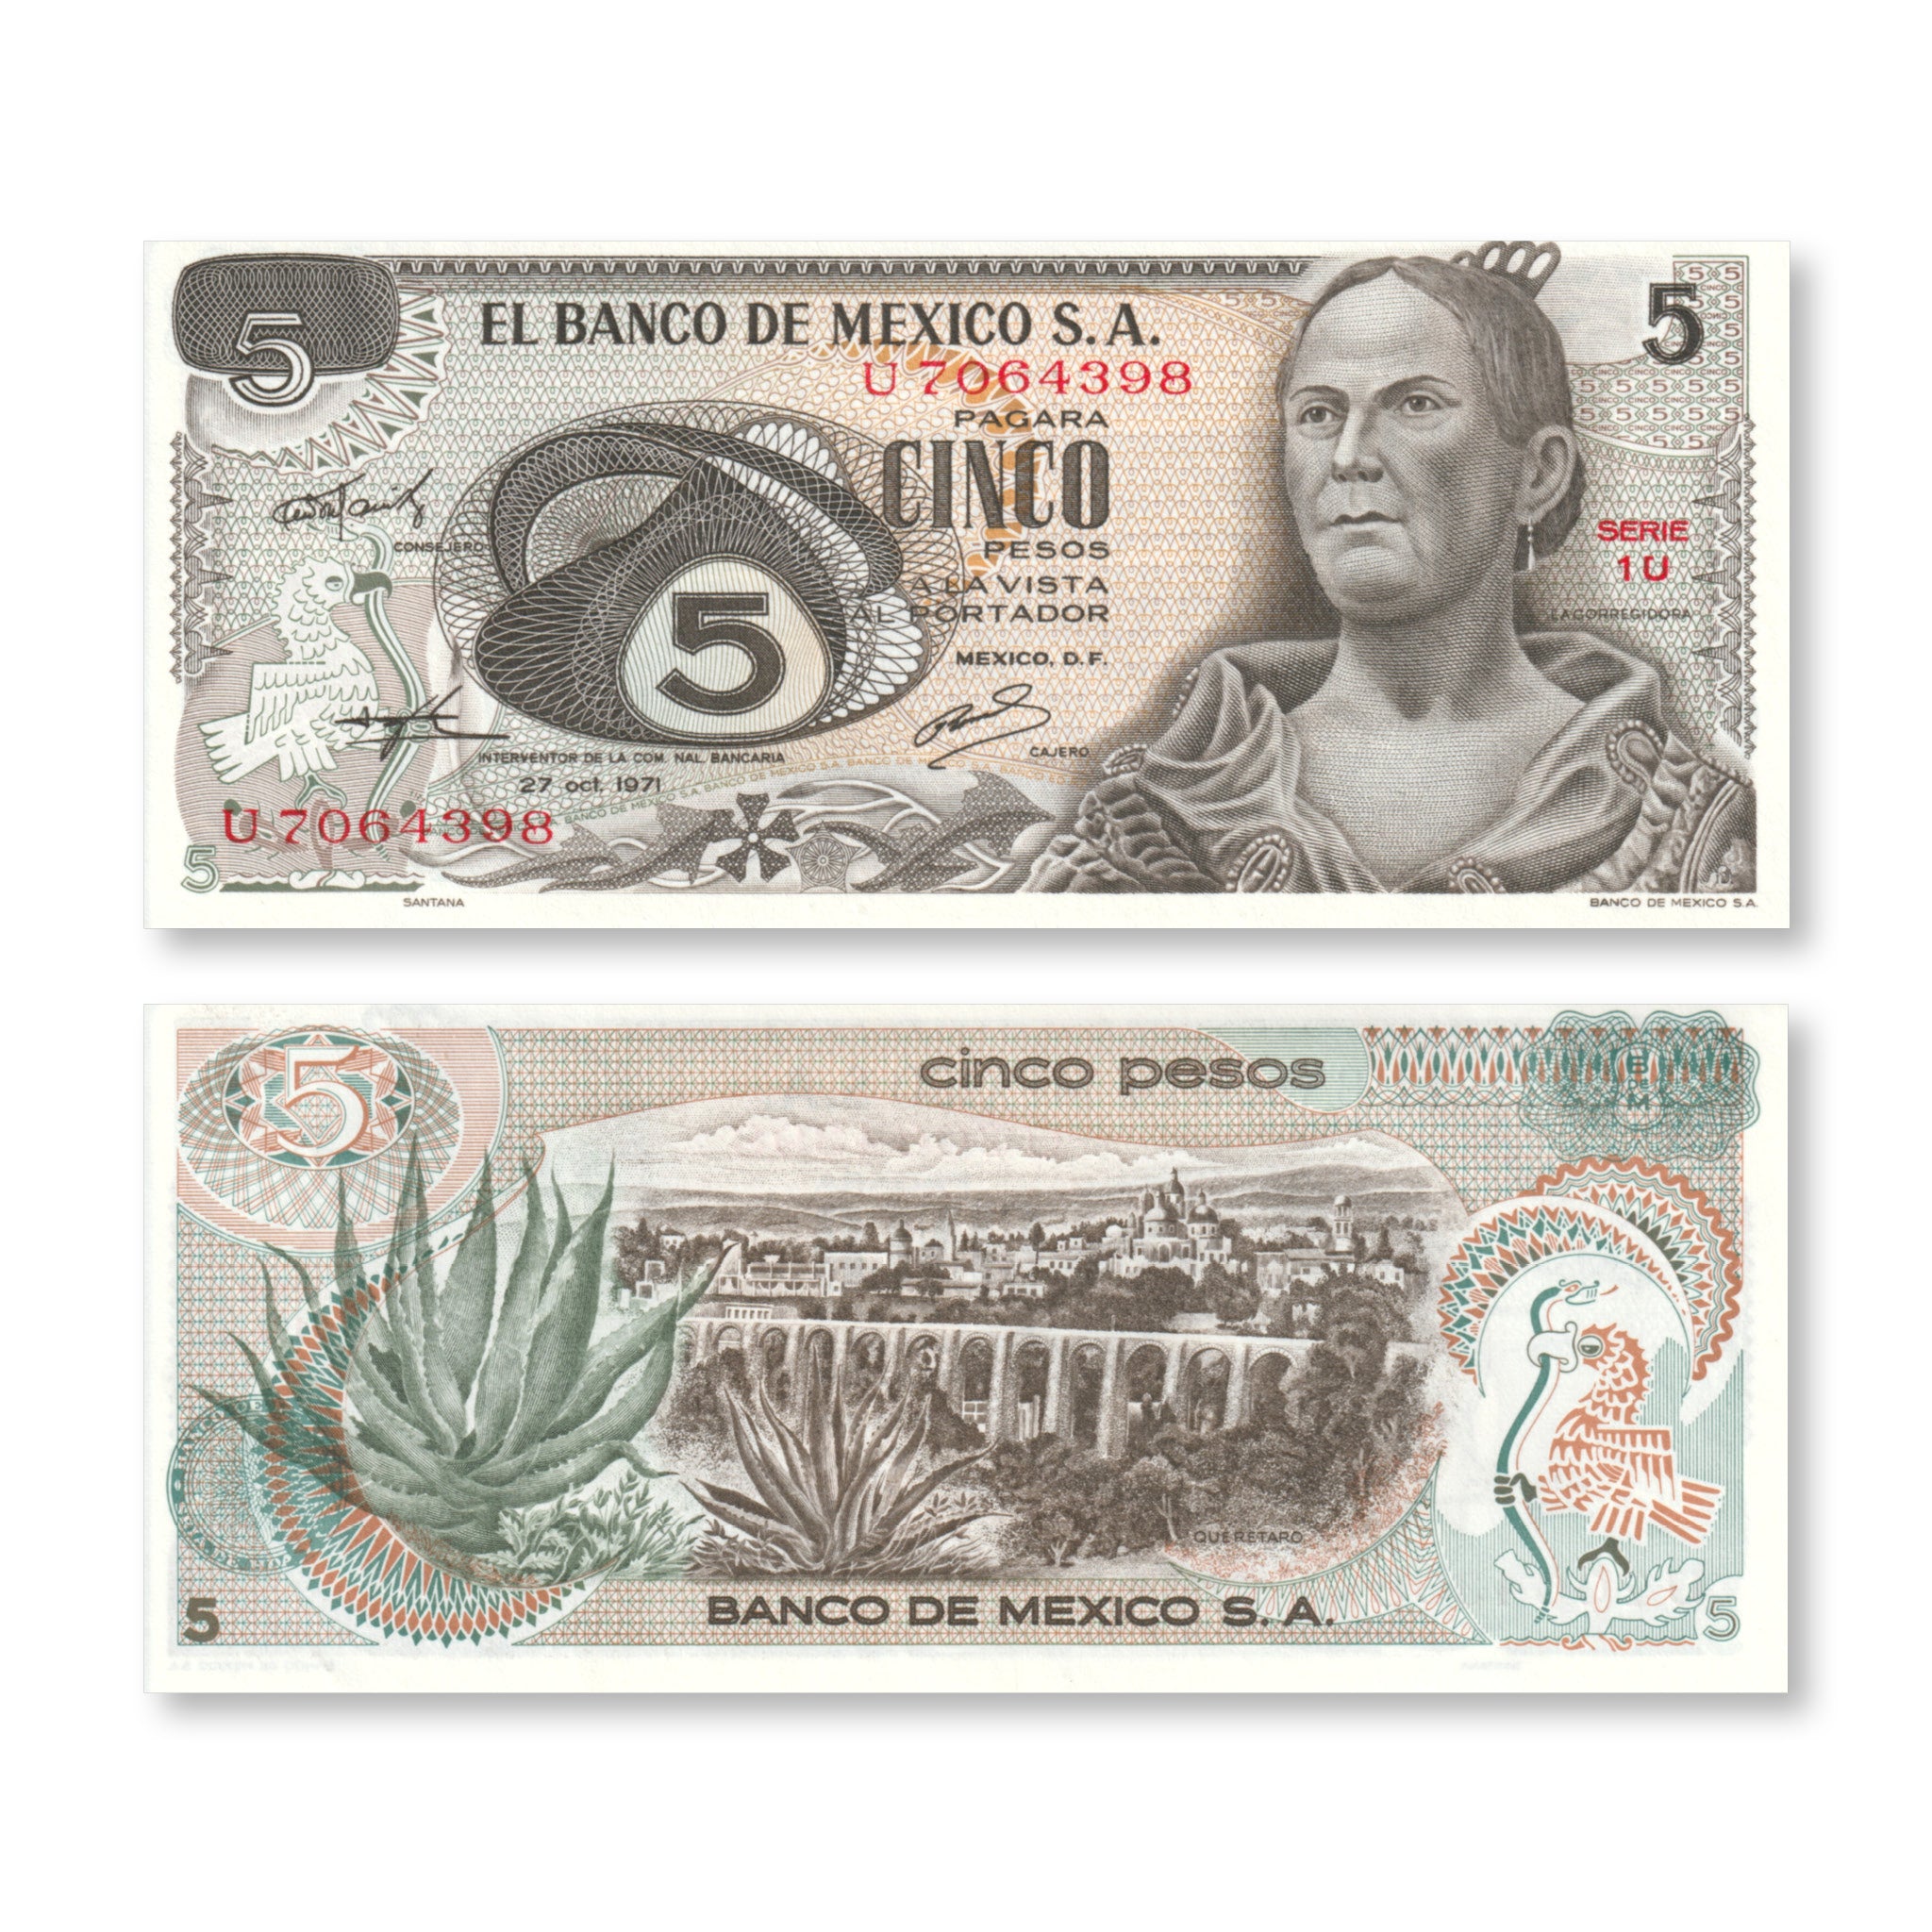 Mexico 5 Pesos, 1971, B642b, P62b, UNC - Robert's World Money - World Banknotes